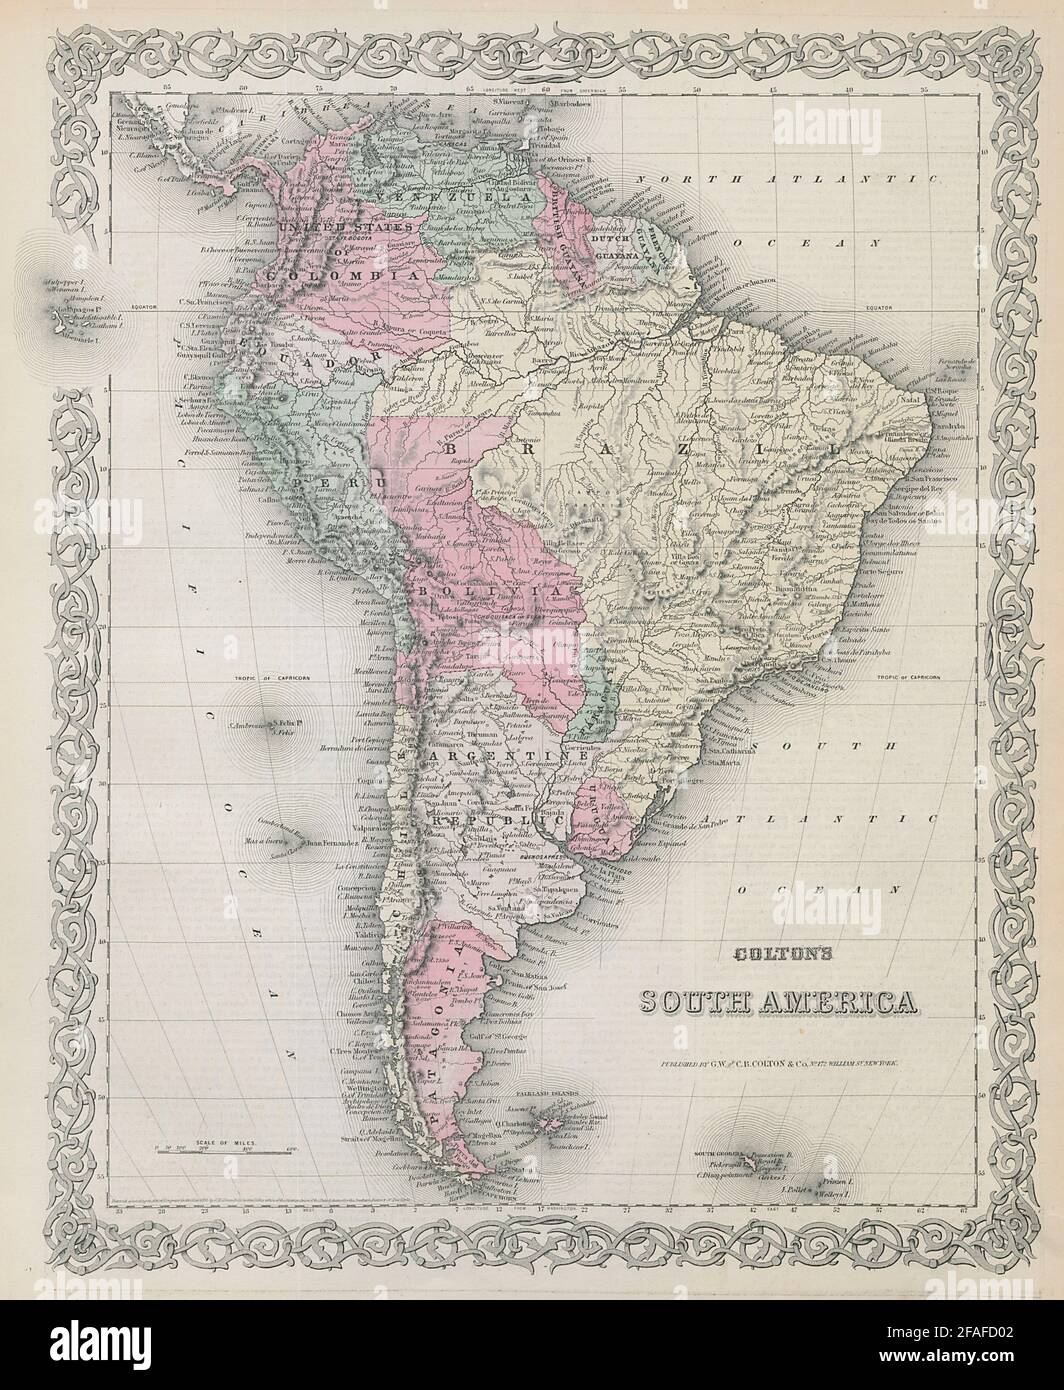 Colton's South America. Bolivian Litoral. Decorative antique map 1869 old Stock Photo